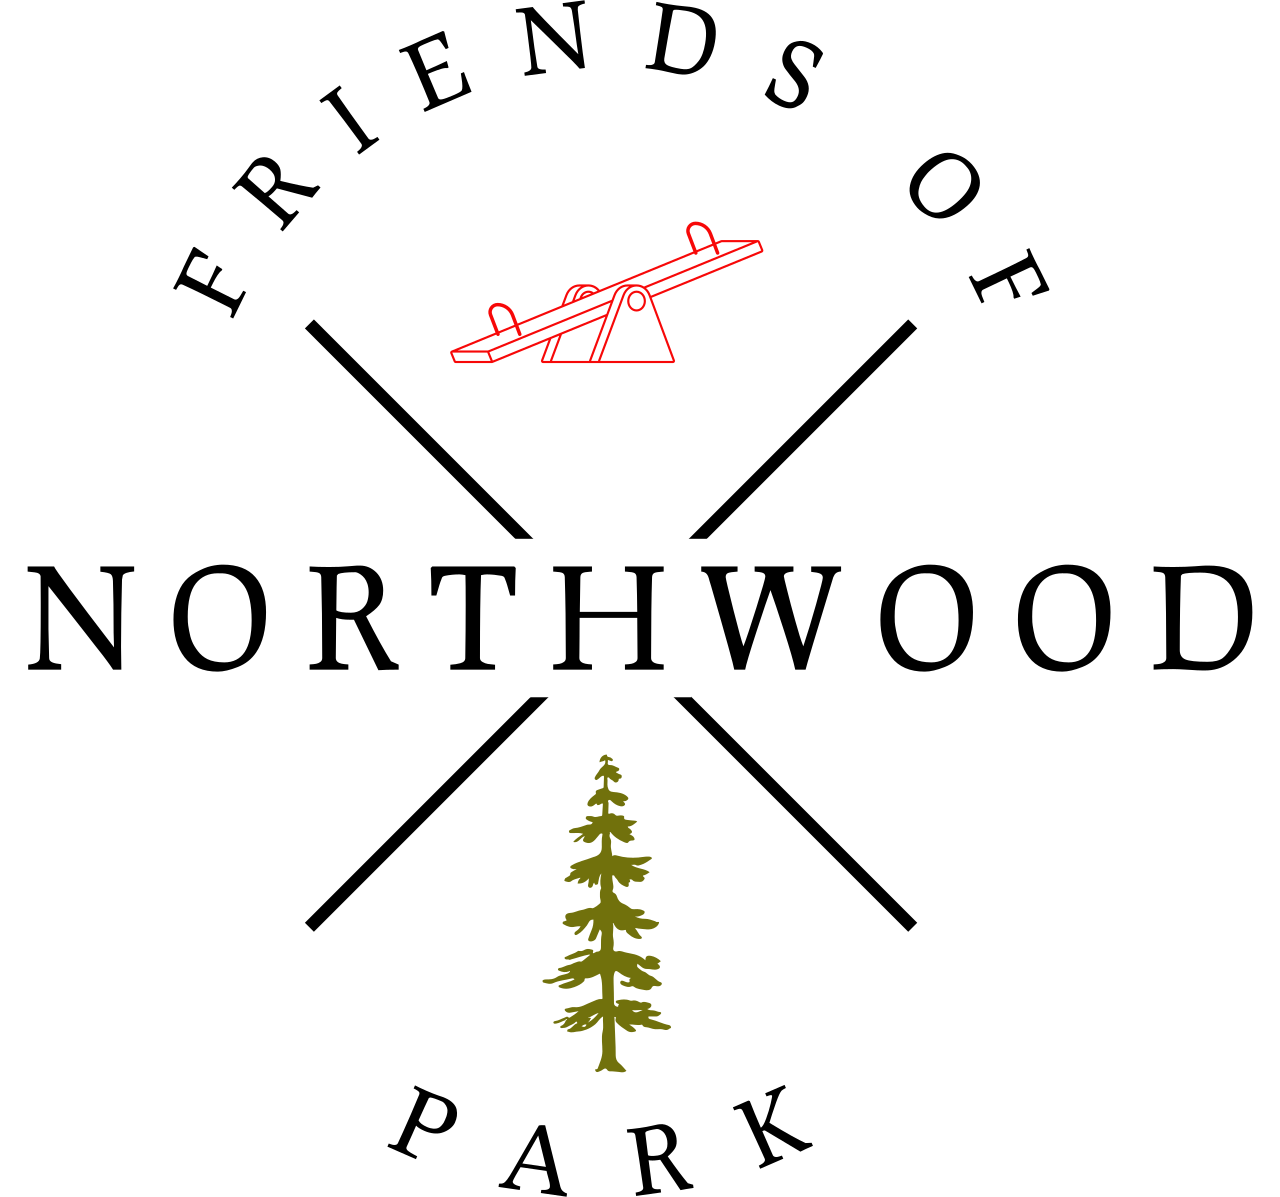 Northwood 's logo